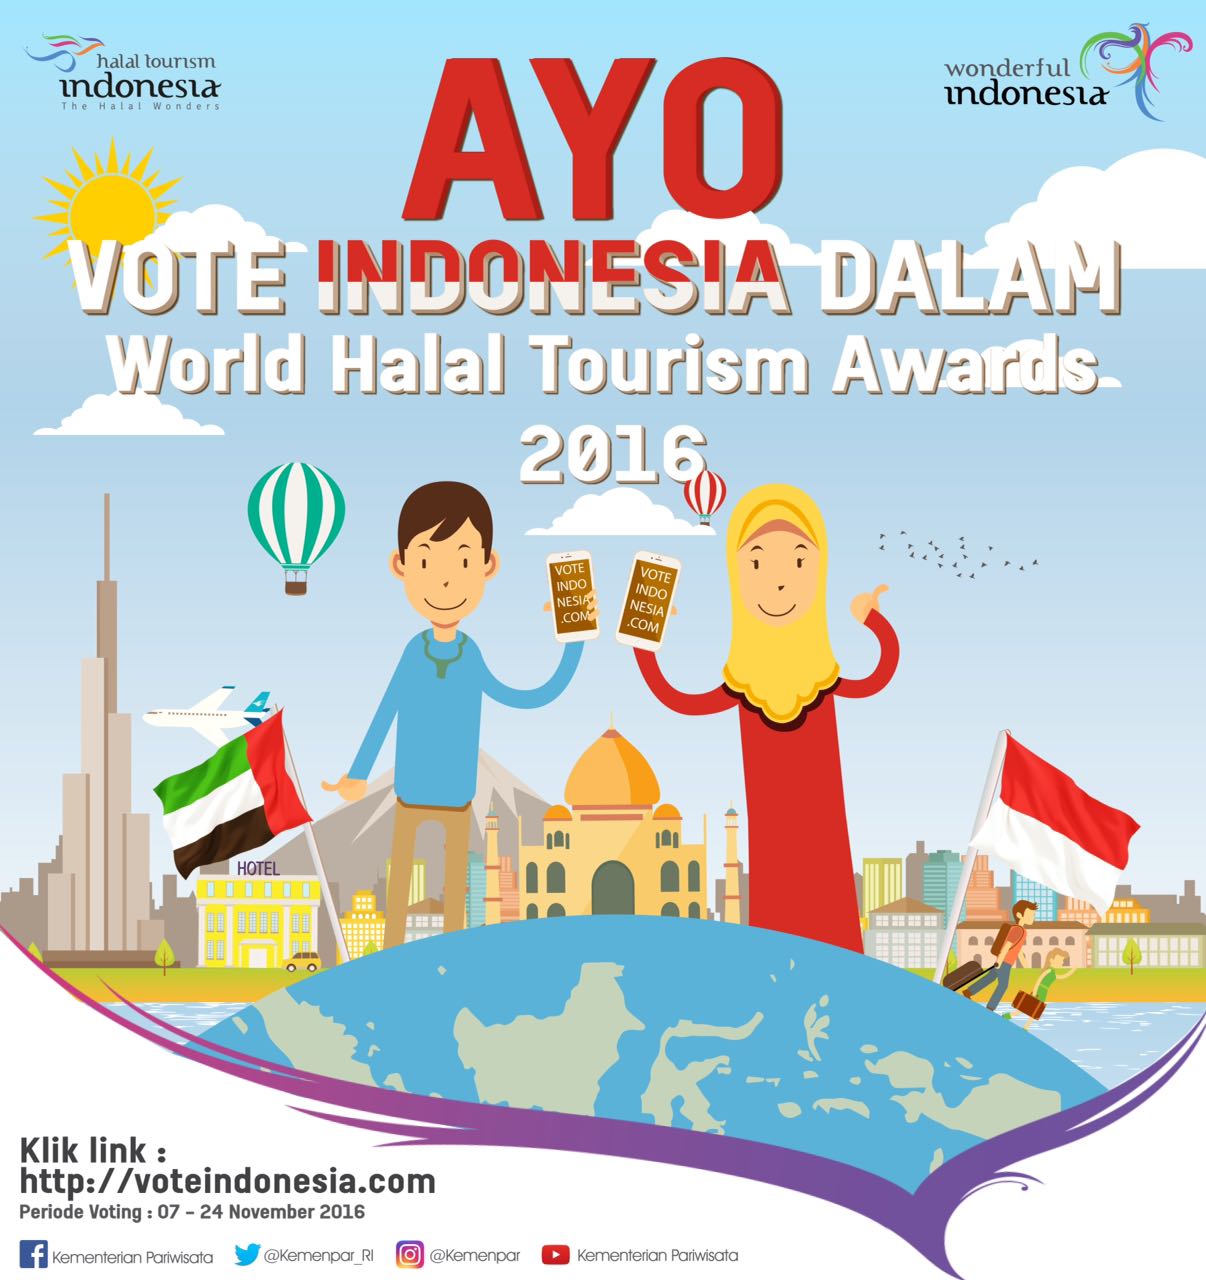 world halal tourism award